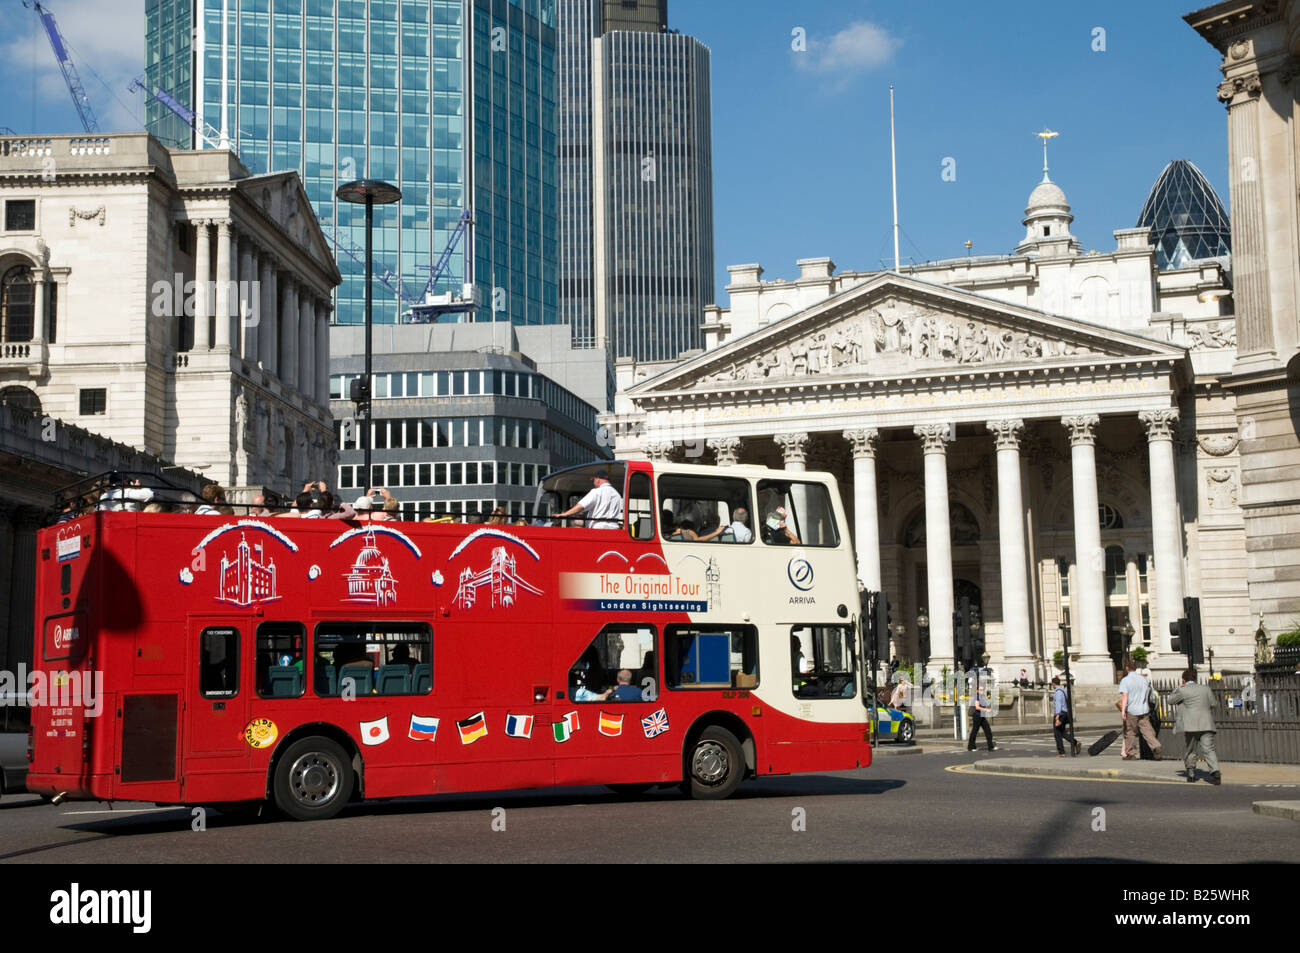 Original Tour  bus in the City of London, England UK Stock Photo